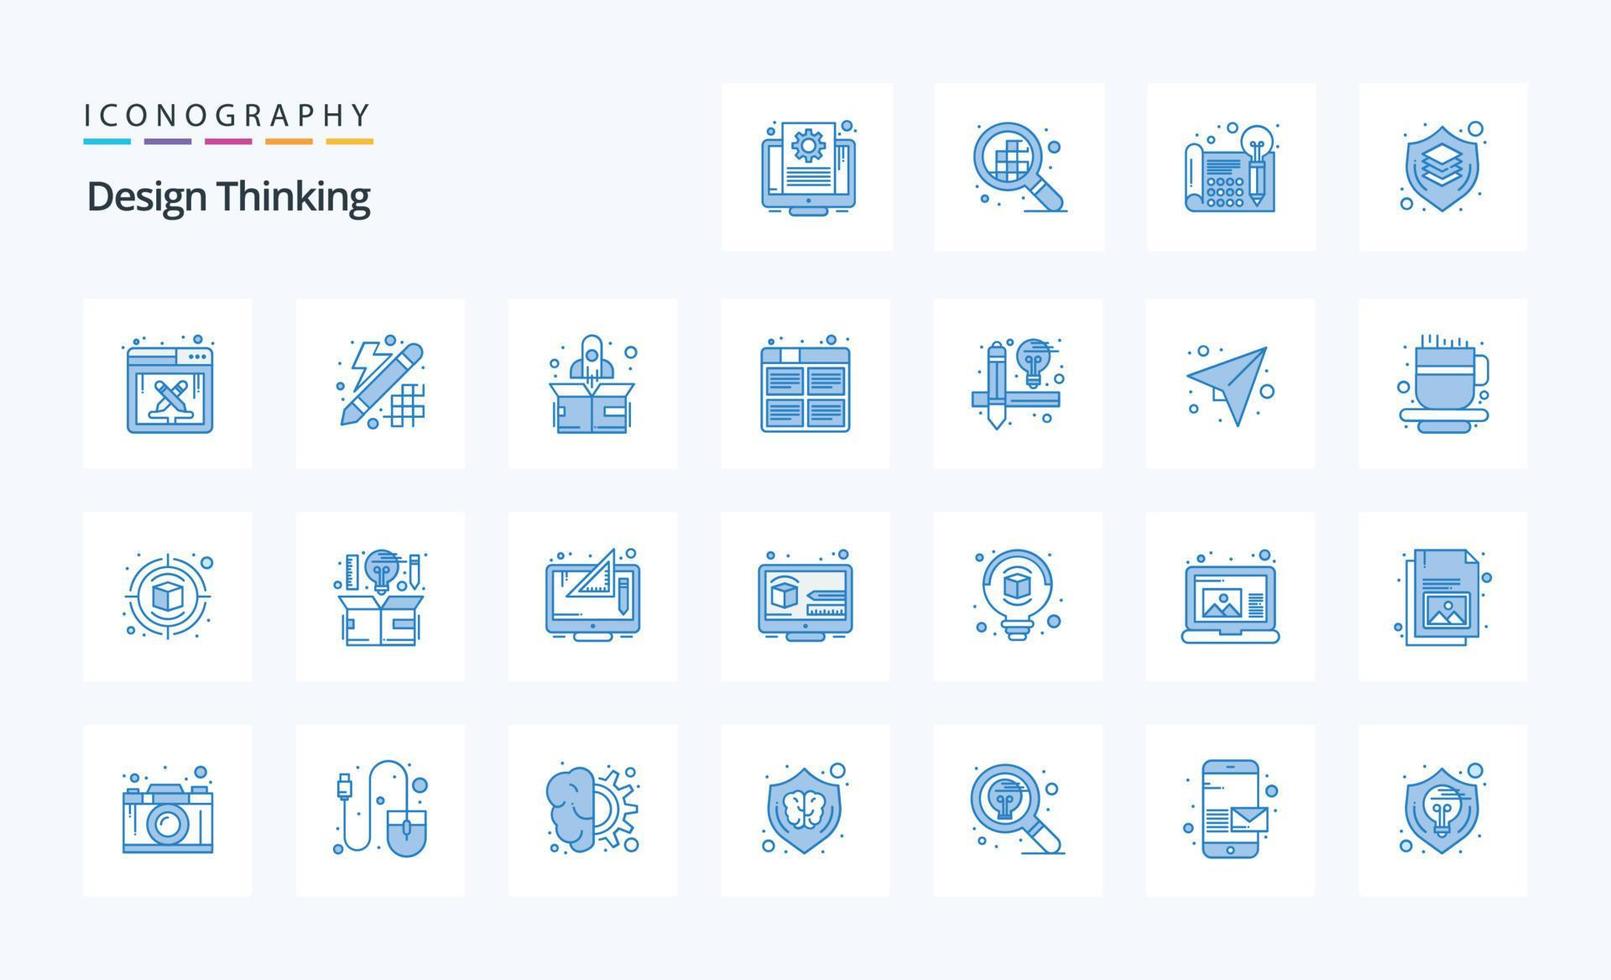 25 pack d'icônes bleu design thinking vecteur